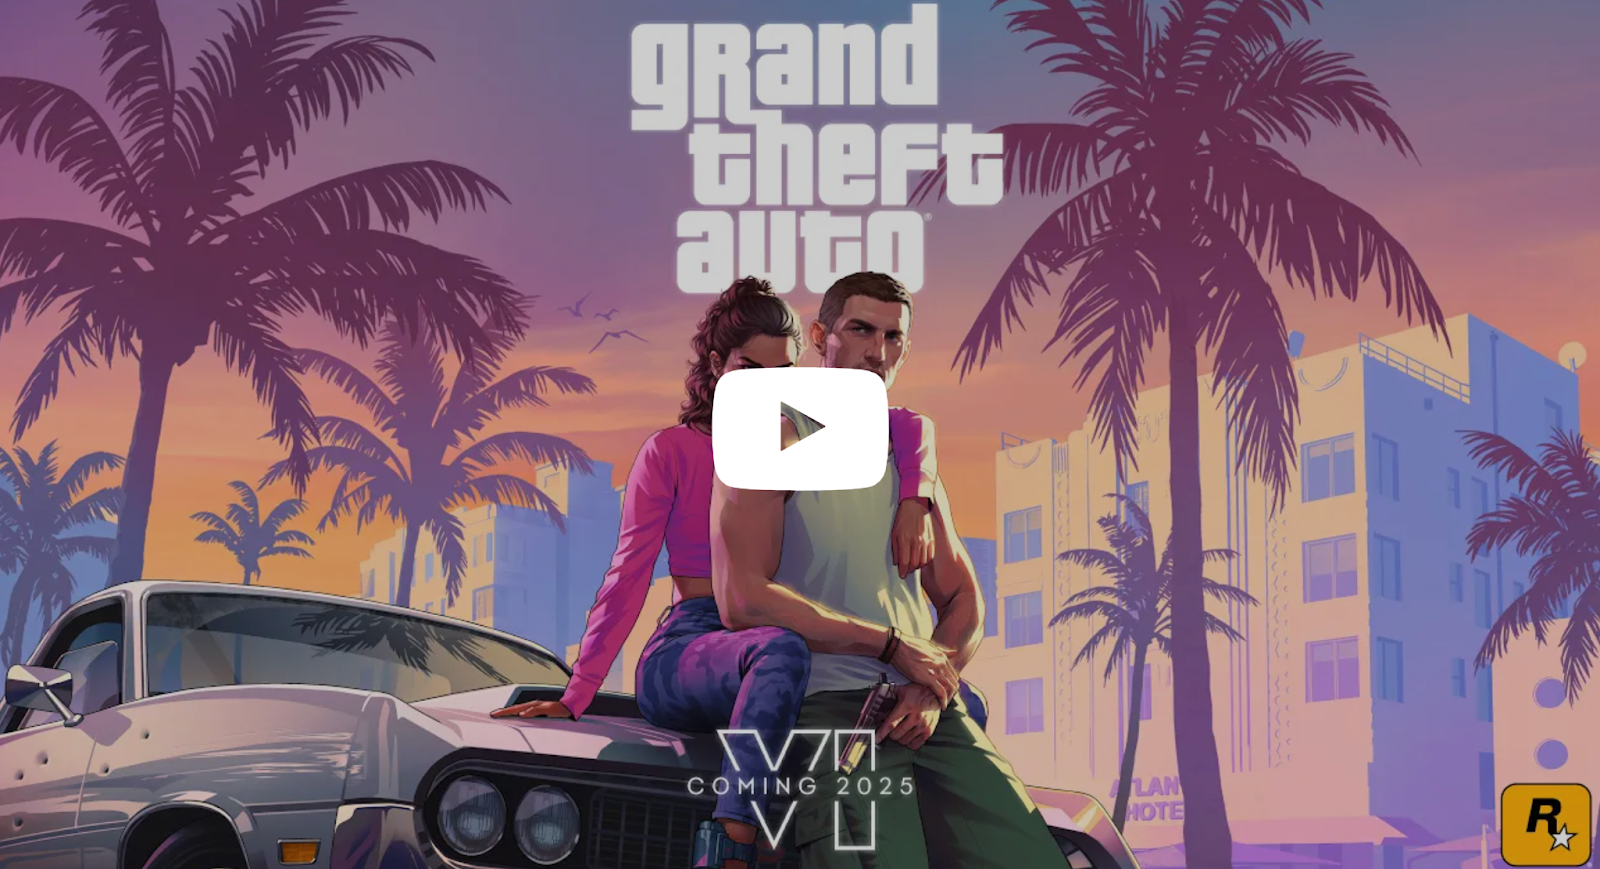 The Grand Theft Auto VI trailer thumbnail